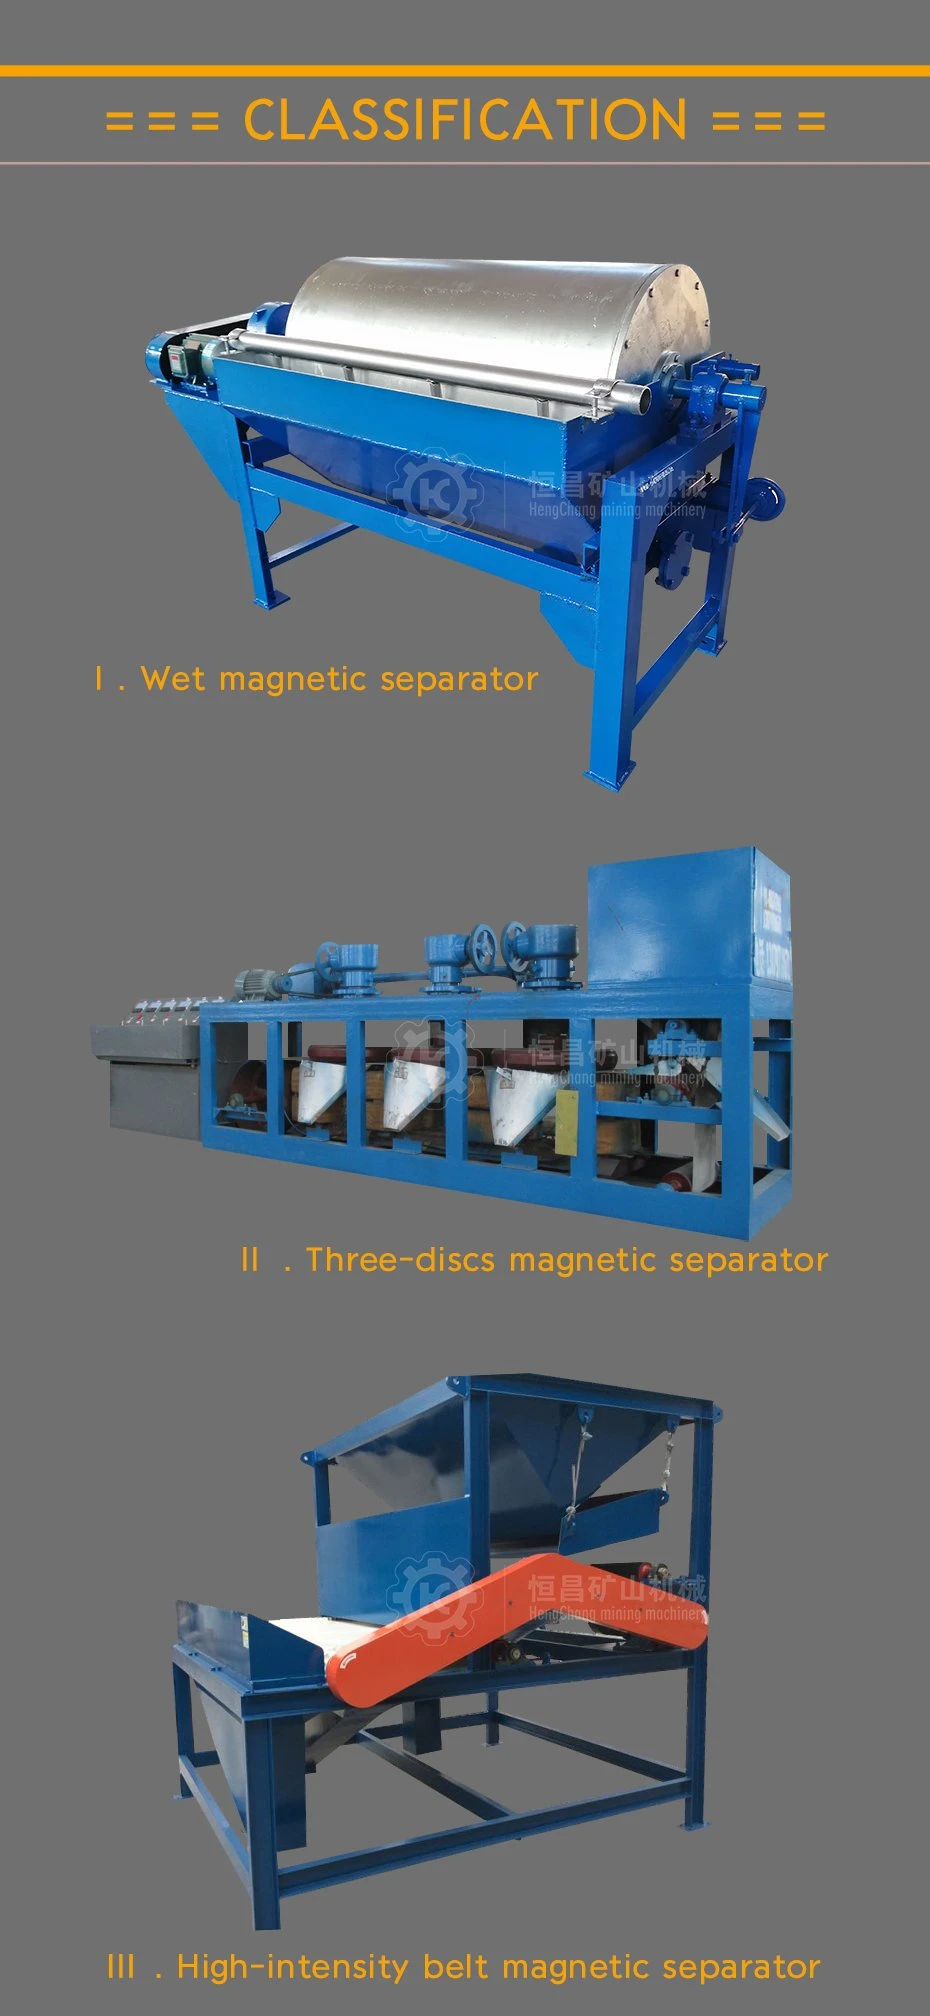 12000 Gauss Dry High Intensity Belt Magnetic Separator for Quartz